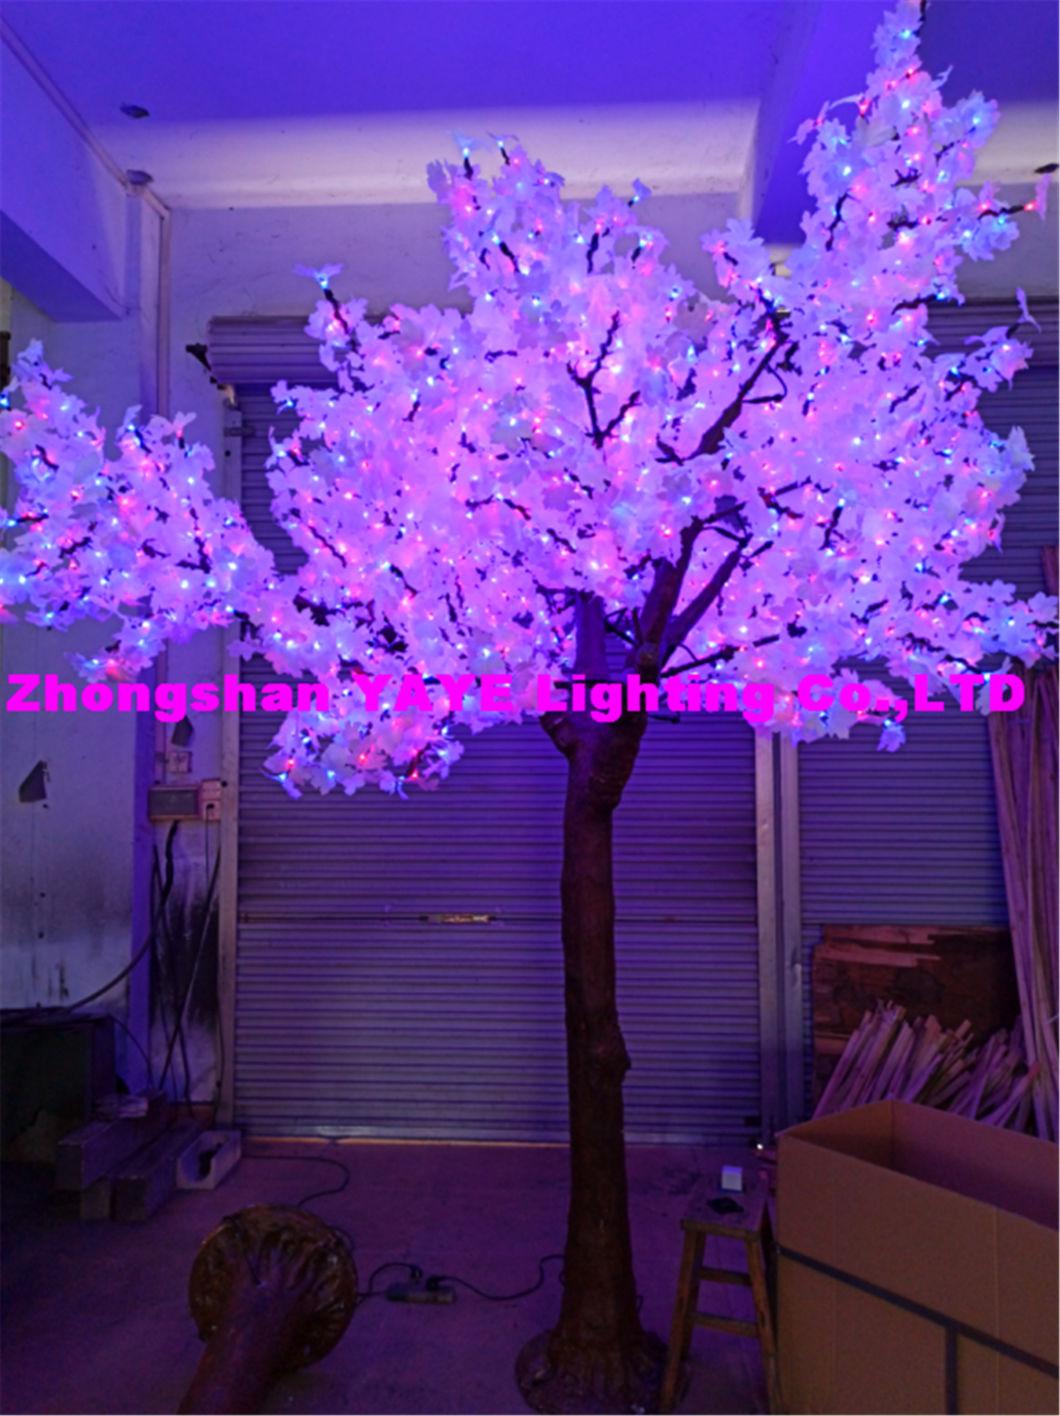 Yaye CE & RoHS Approval & Waterproof IP65 LED Tree / LED Maple Tree/LED Maple Tree Light with Warranty 2 Years